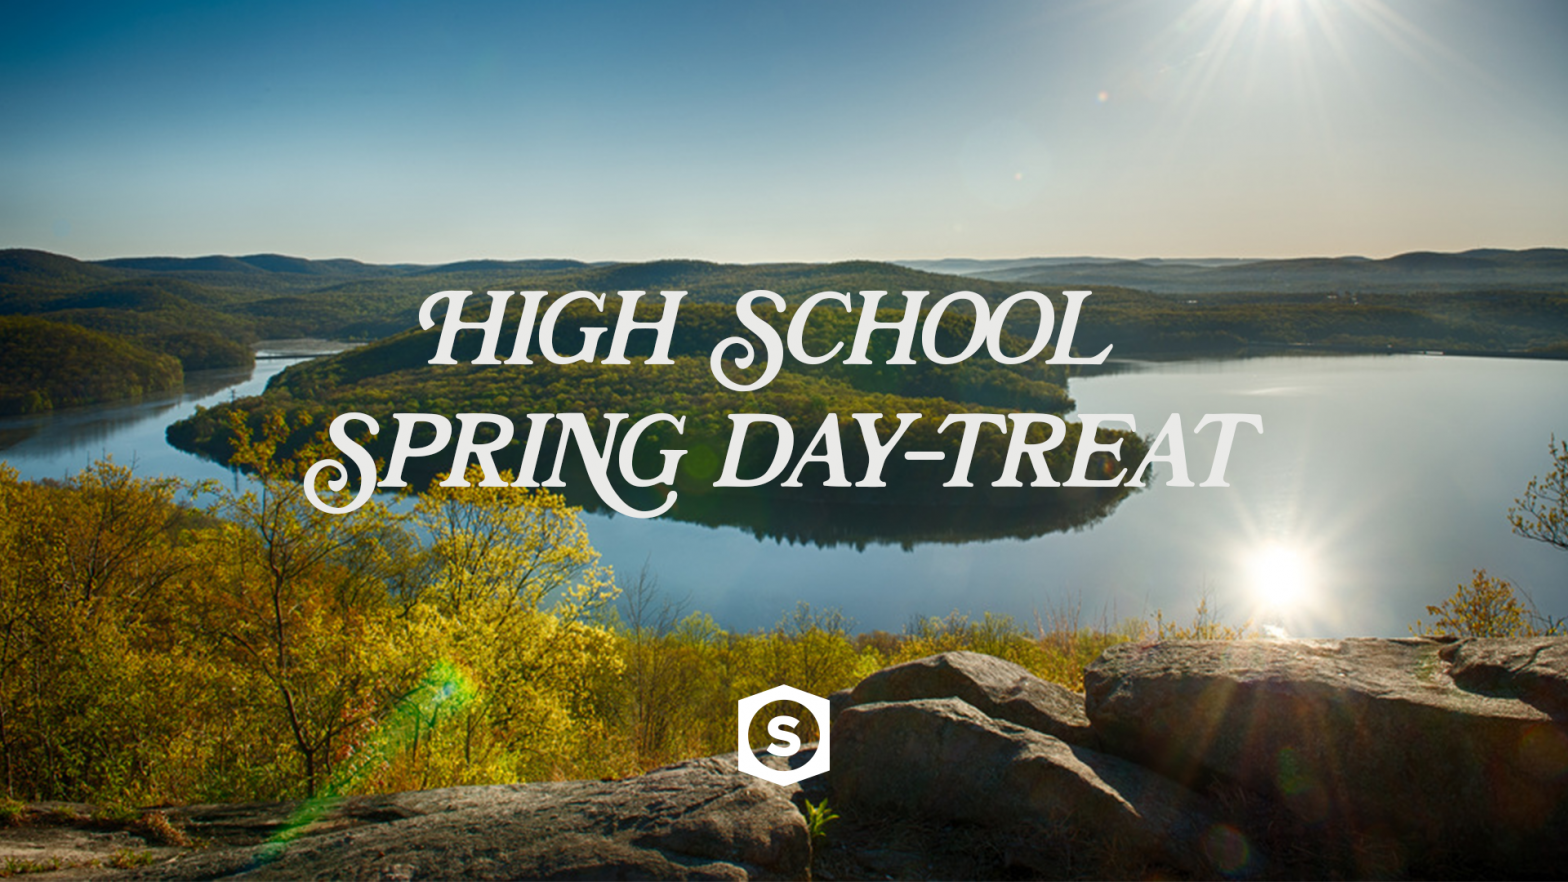 High School Spring Day-treat image